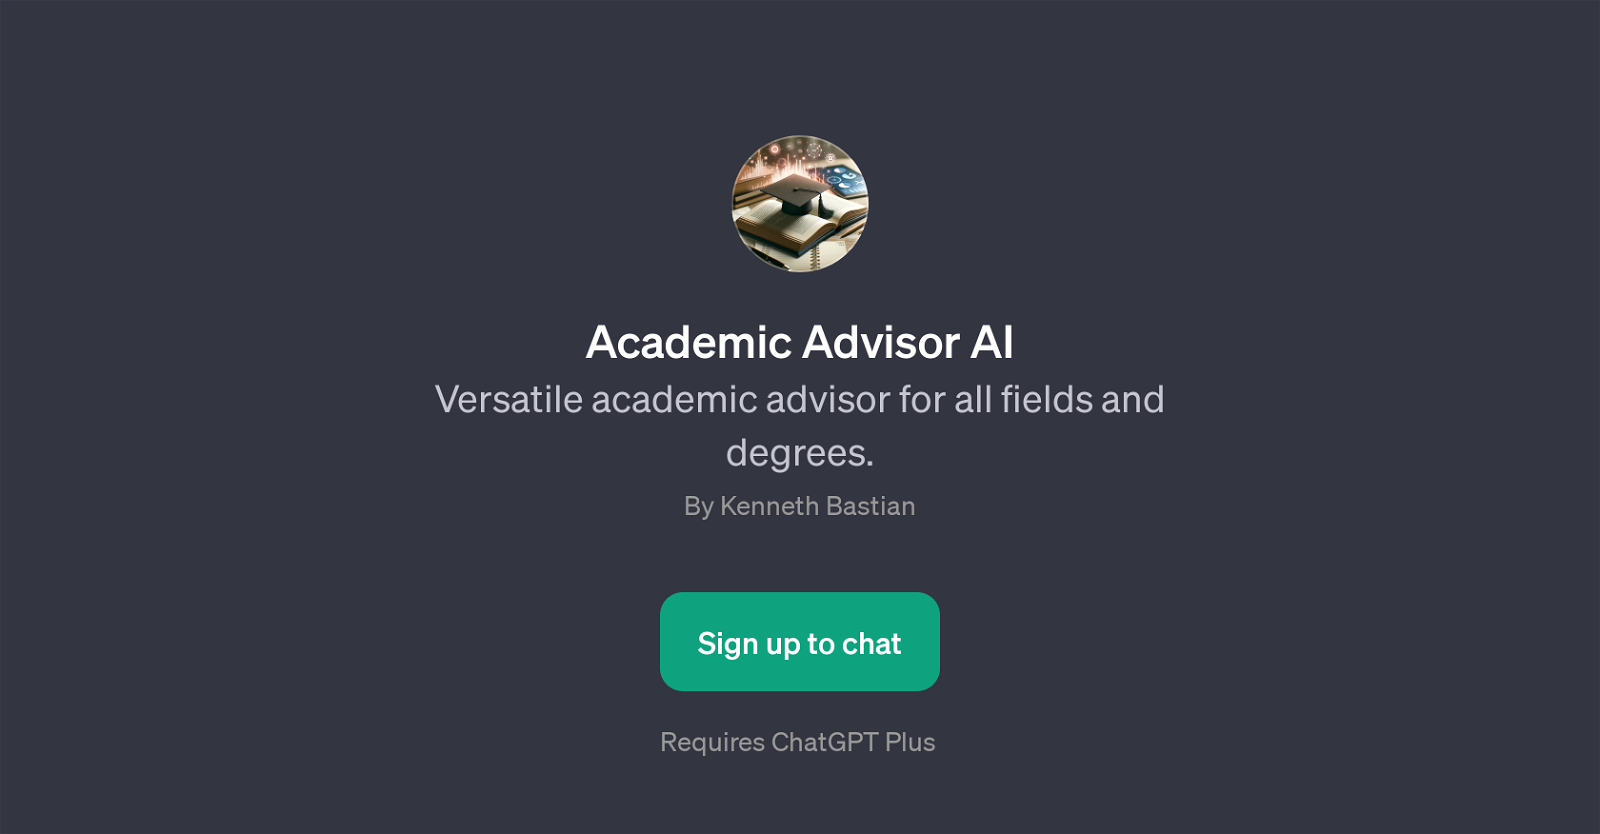 Academic Advisor AI website